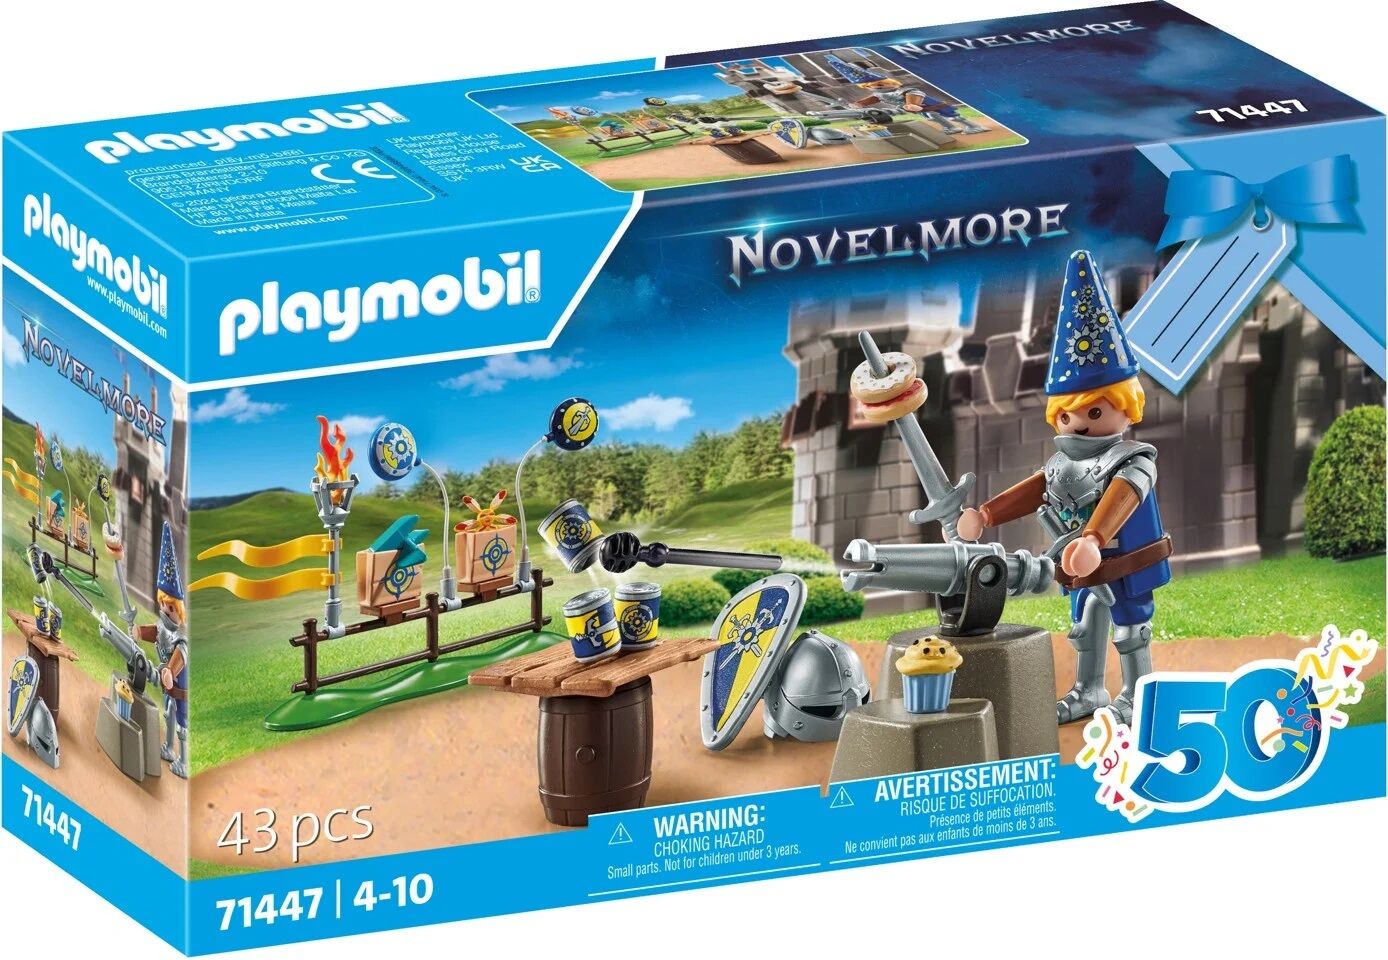 Playmobil 71447 Novelmore Baukasten Rittergeburtstag von Playmobil